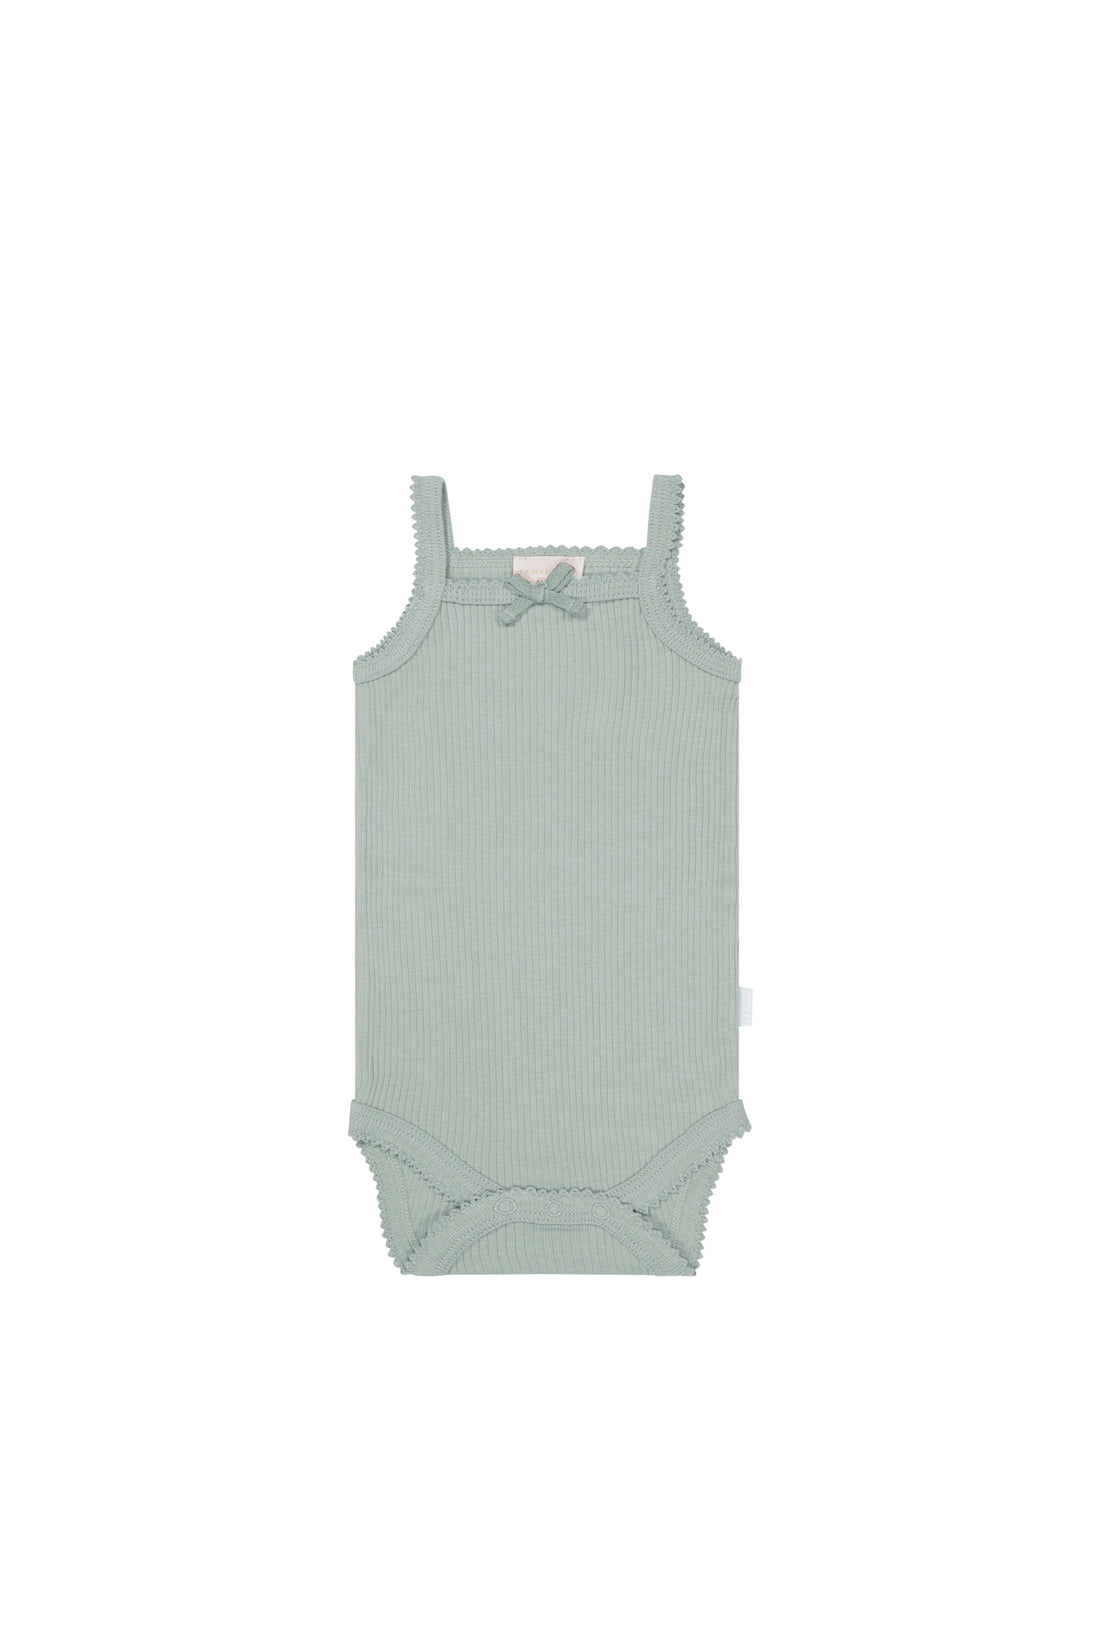 Organic Cotton Modal Singlet Bodysuit - Ocean Spray Childrens Bodysuit from Jamie Kay USA